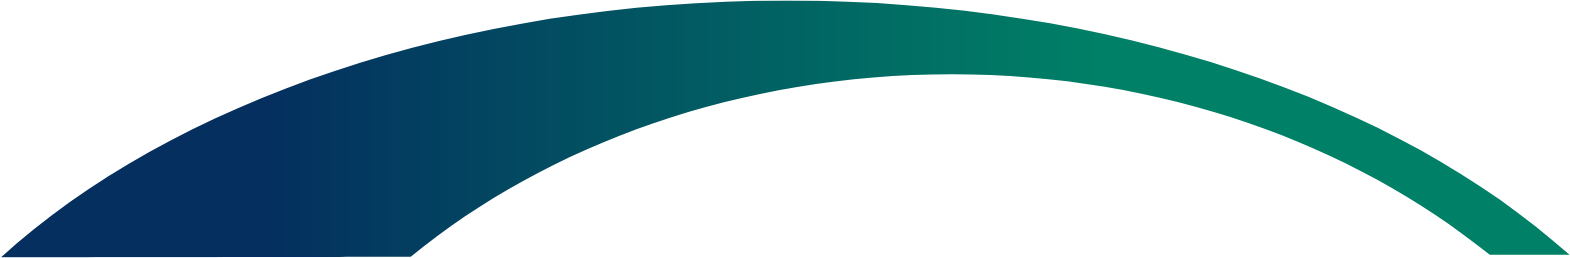 Banco BPM logo (transparent PNG)